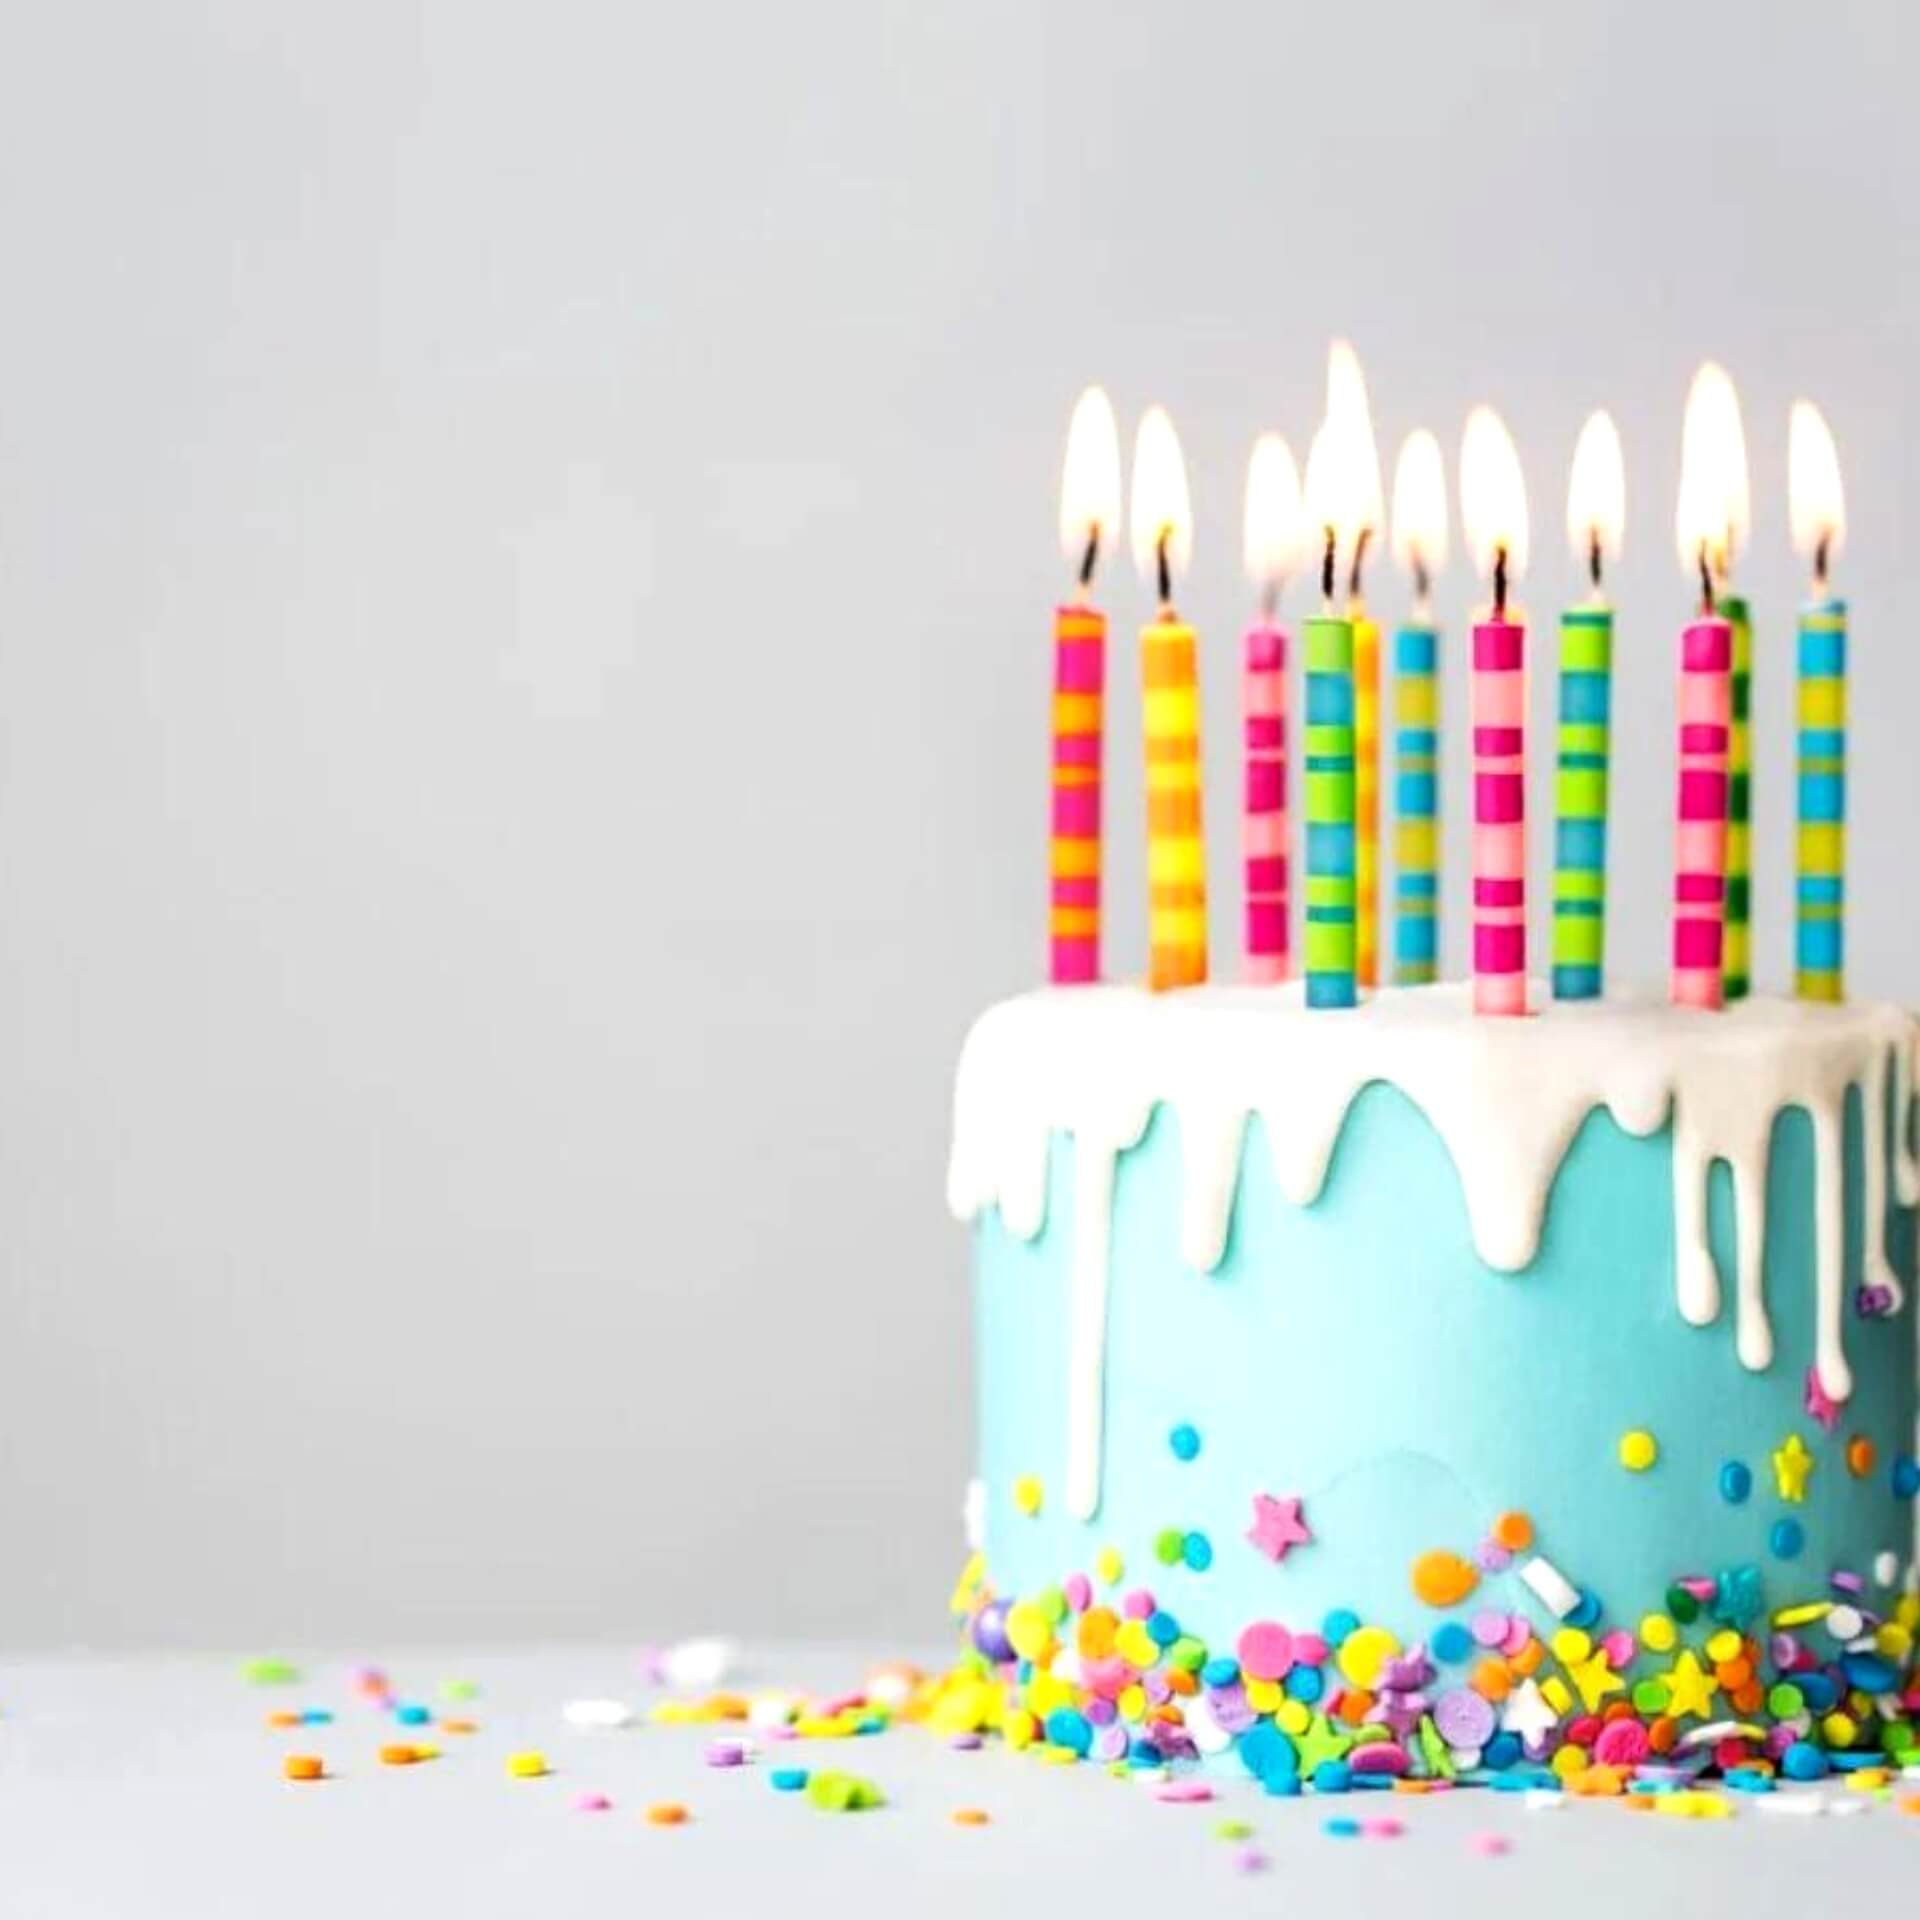 202+ Cake Happy Birthday Wallpaper Photos Free Download